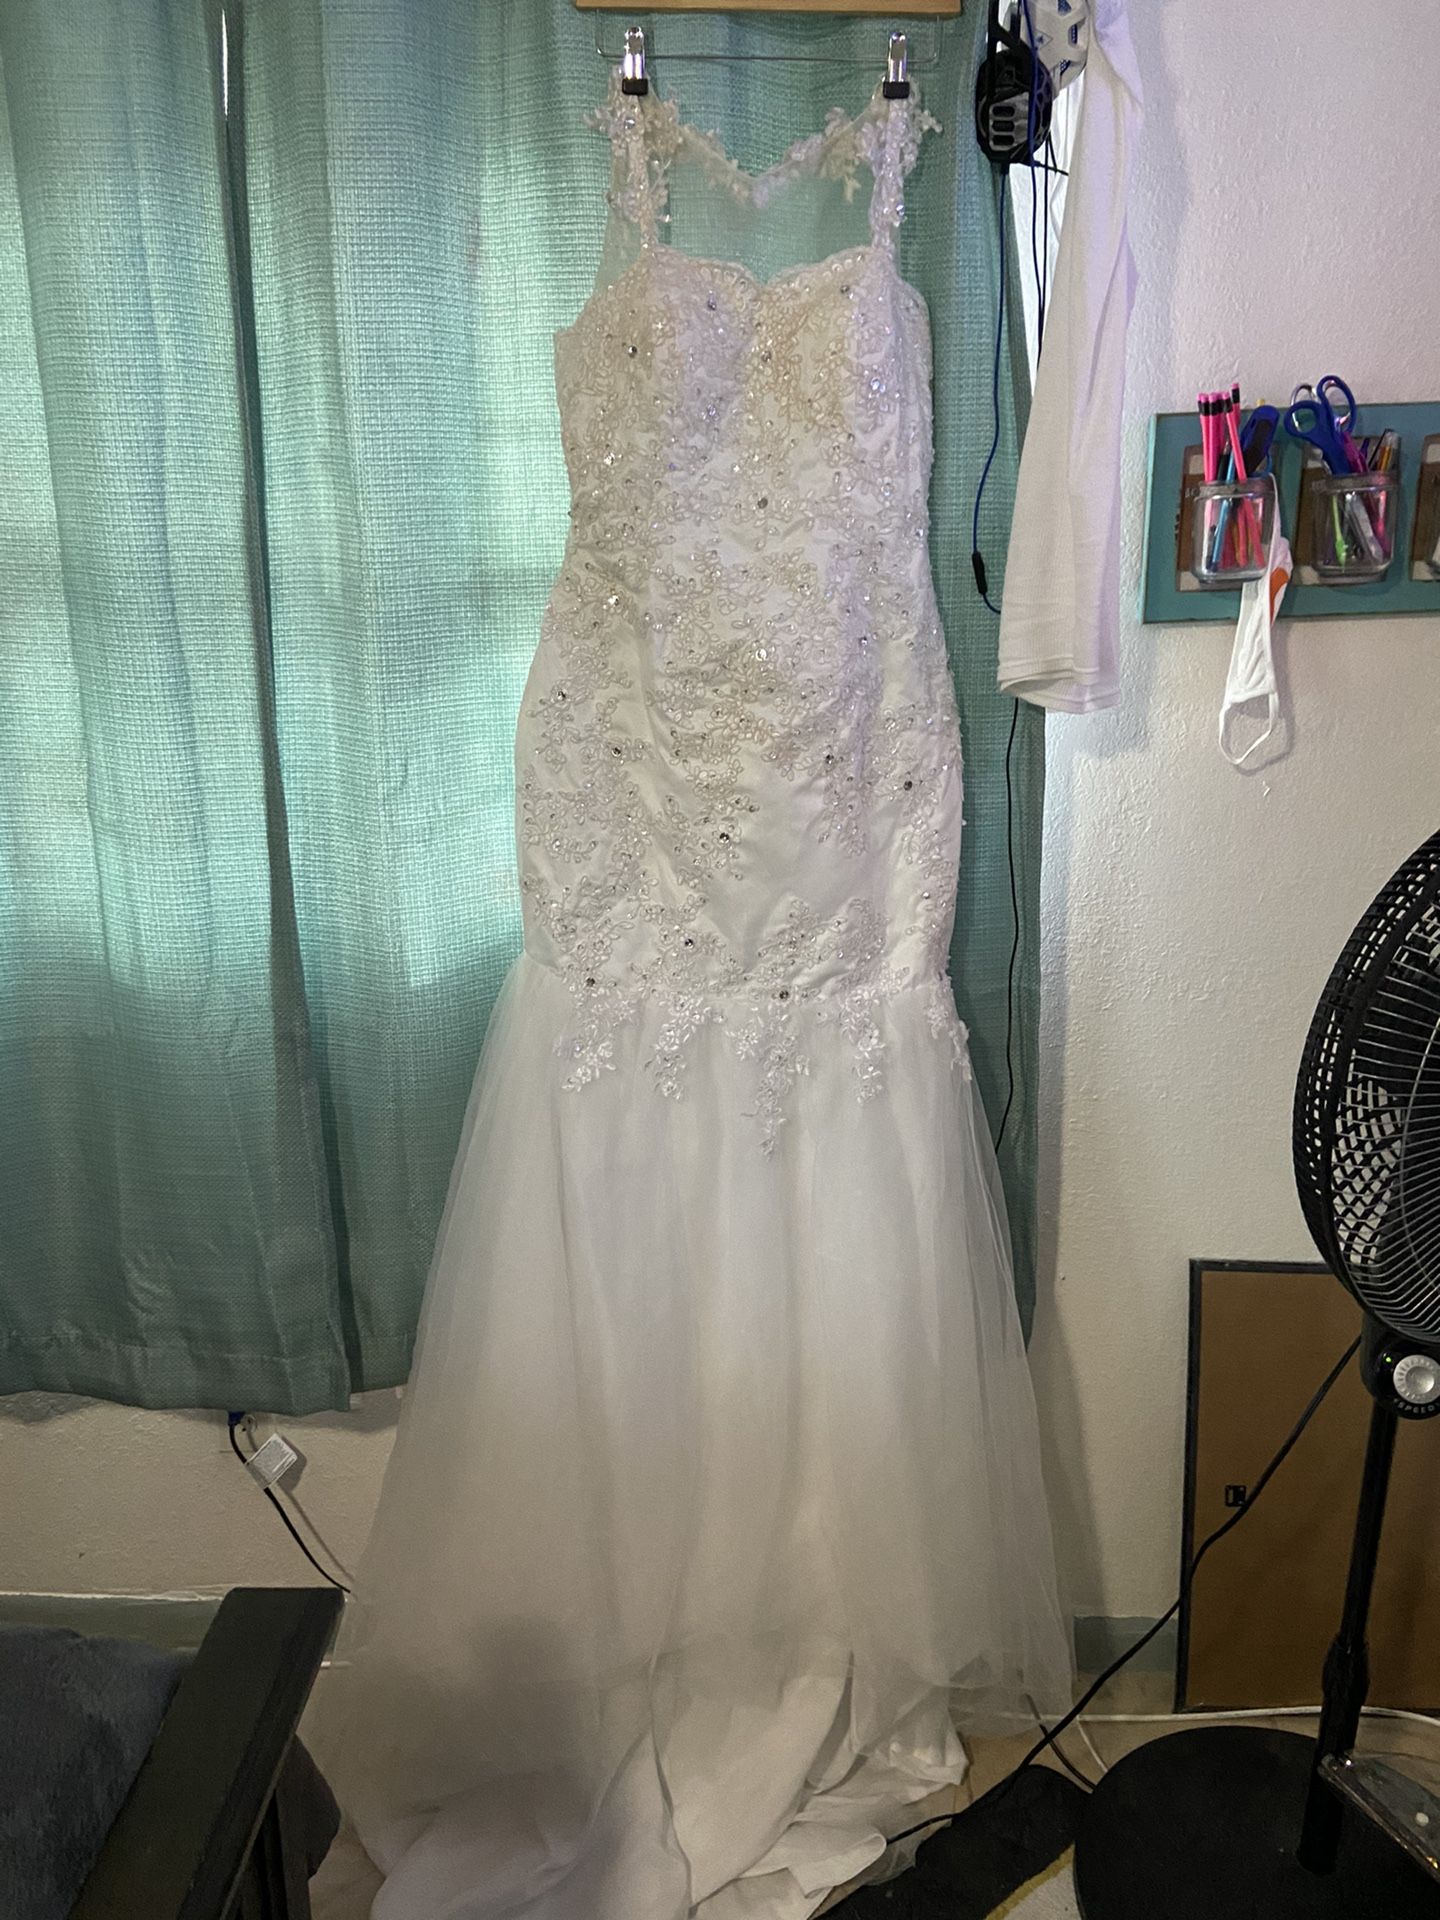 Wedding dress mermaid style size 13 $80 obo